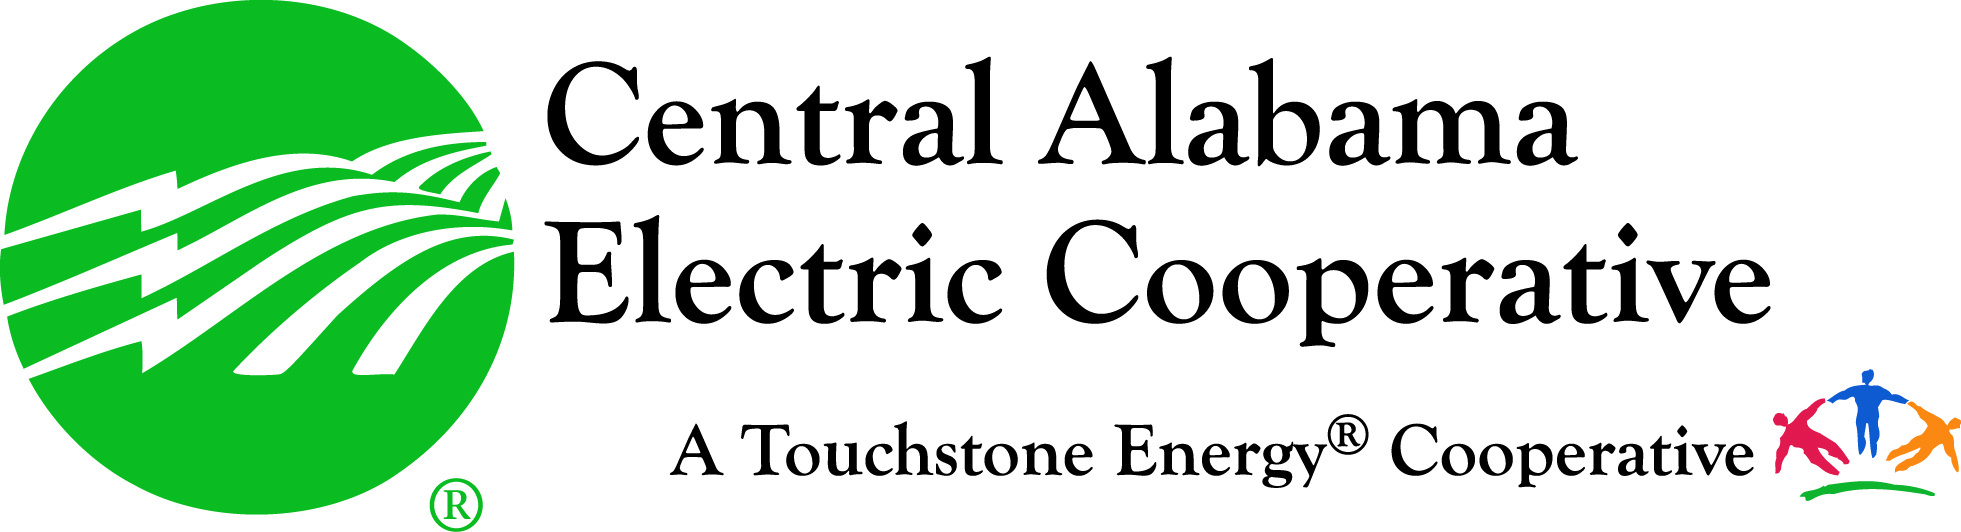 Central Alabama Electric